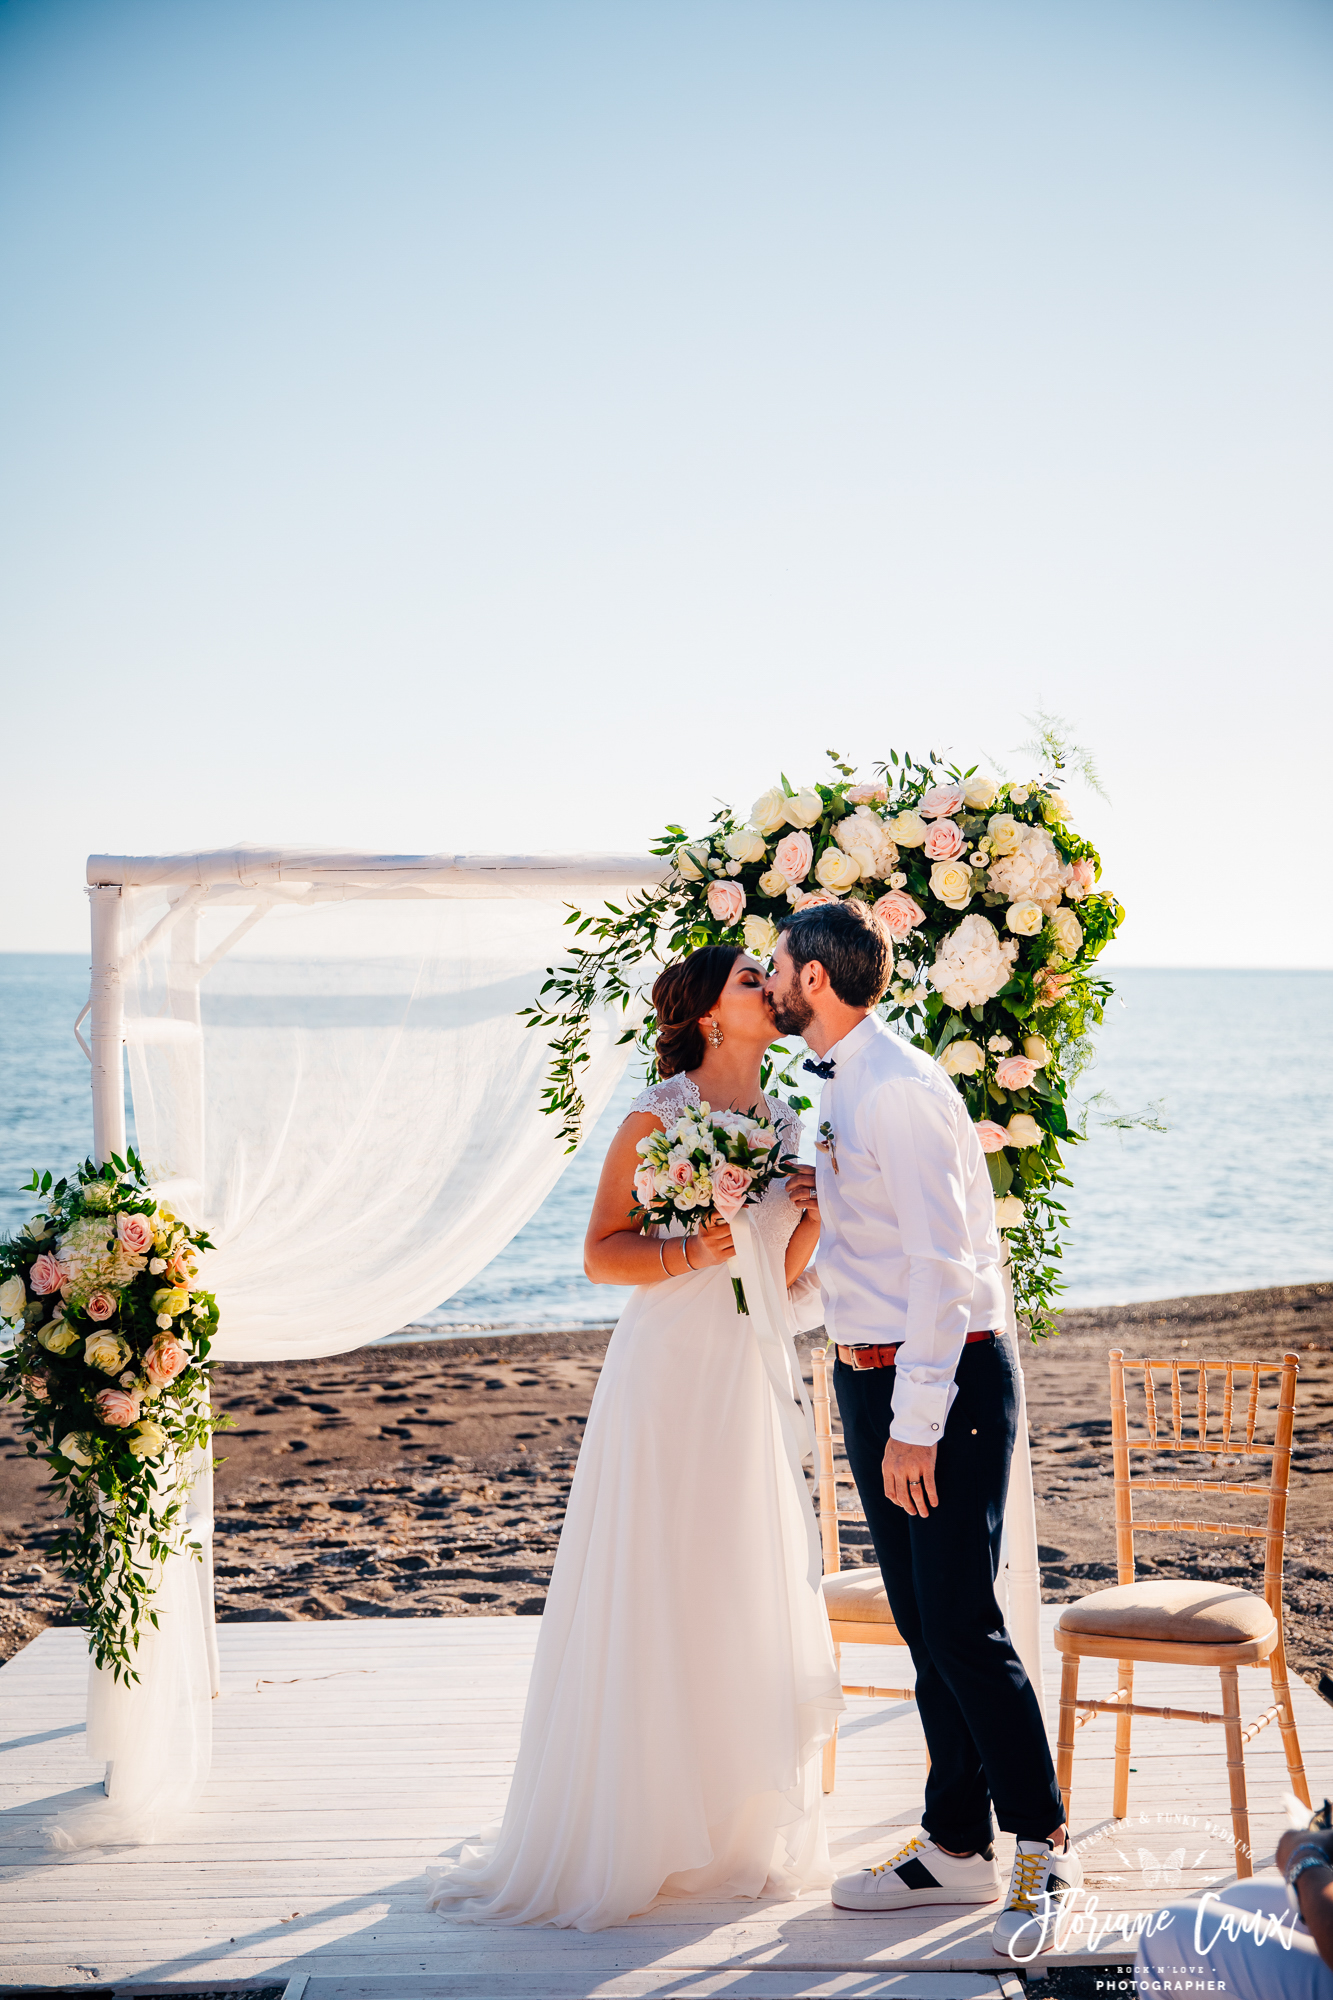 mariage-santorin-grece-ceremonie-laique-plage (22)